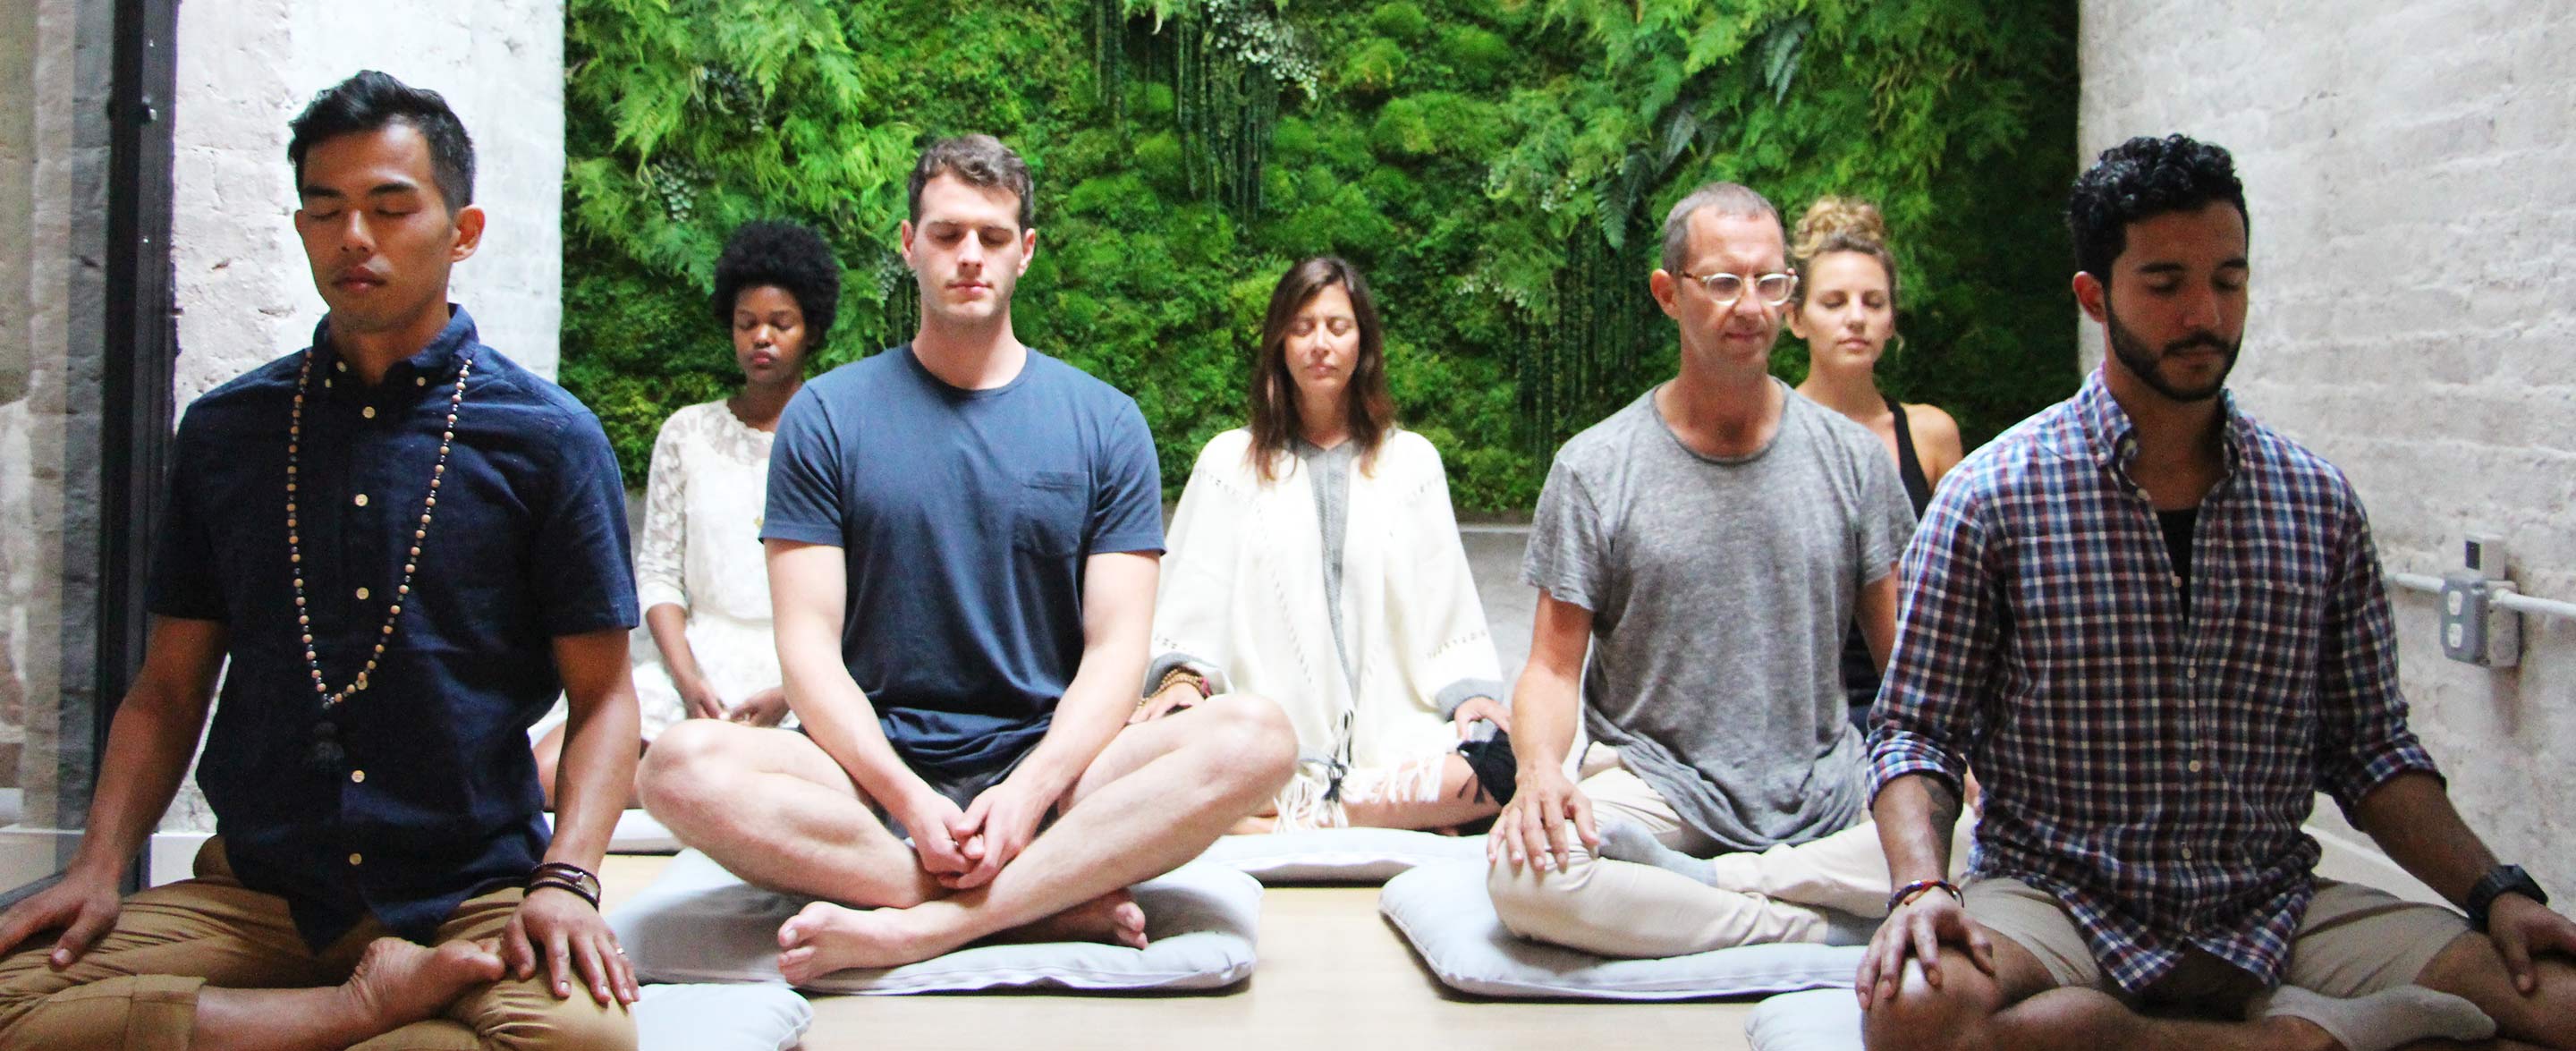 Group of men and women meditating together